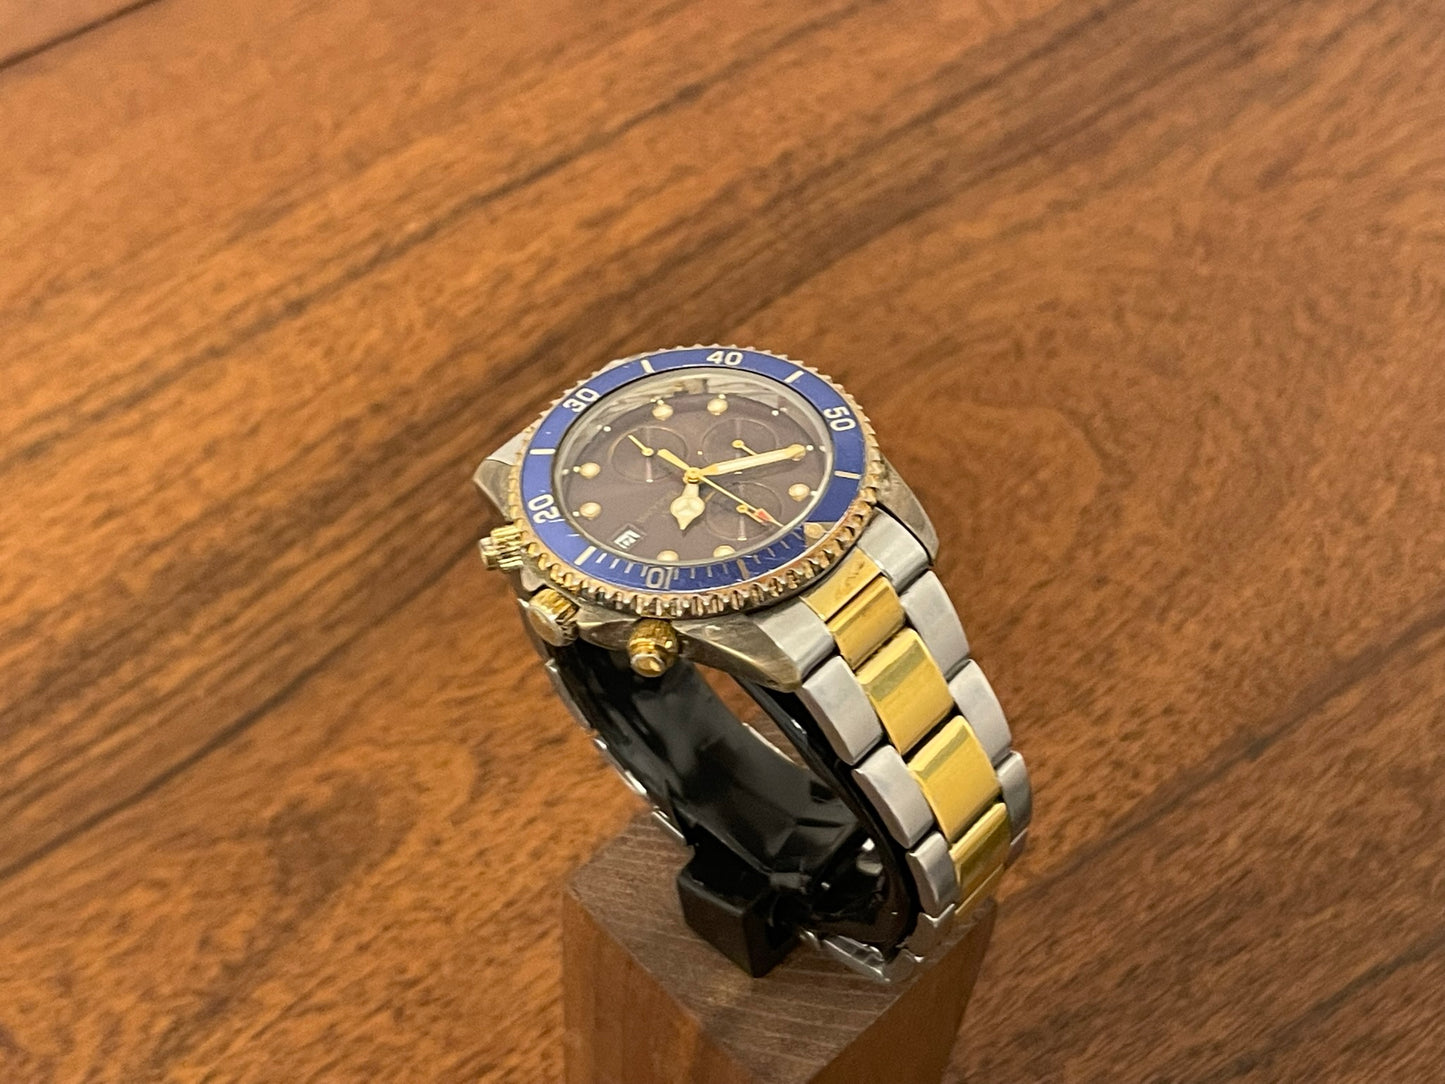 (1990s) Bulova "Submariner" chronograph diver